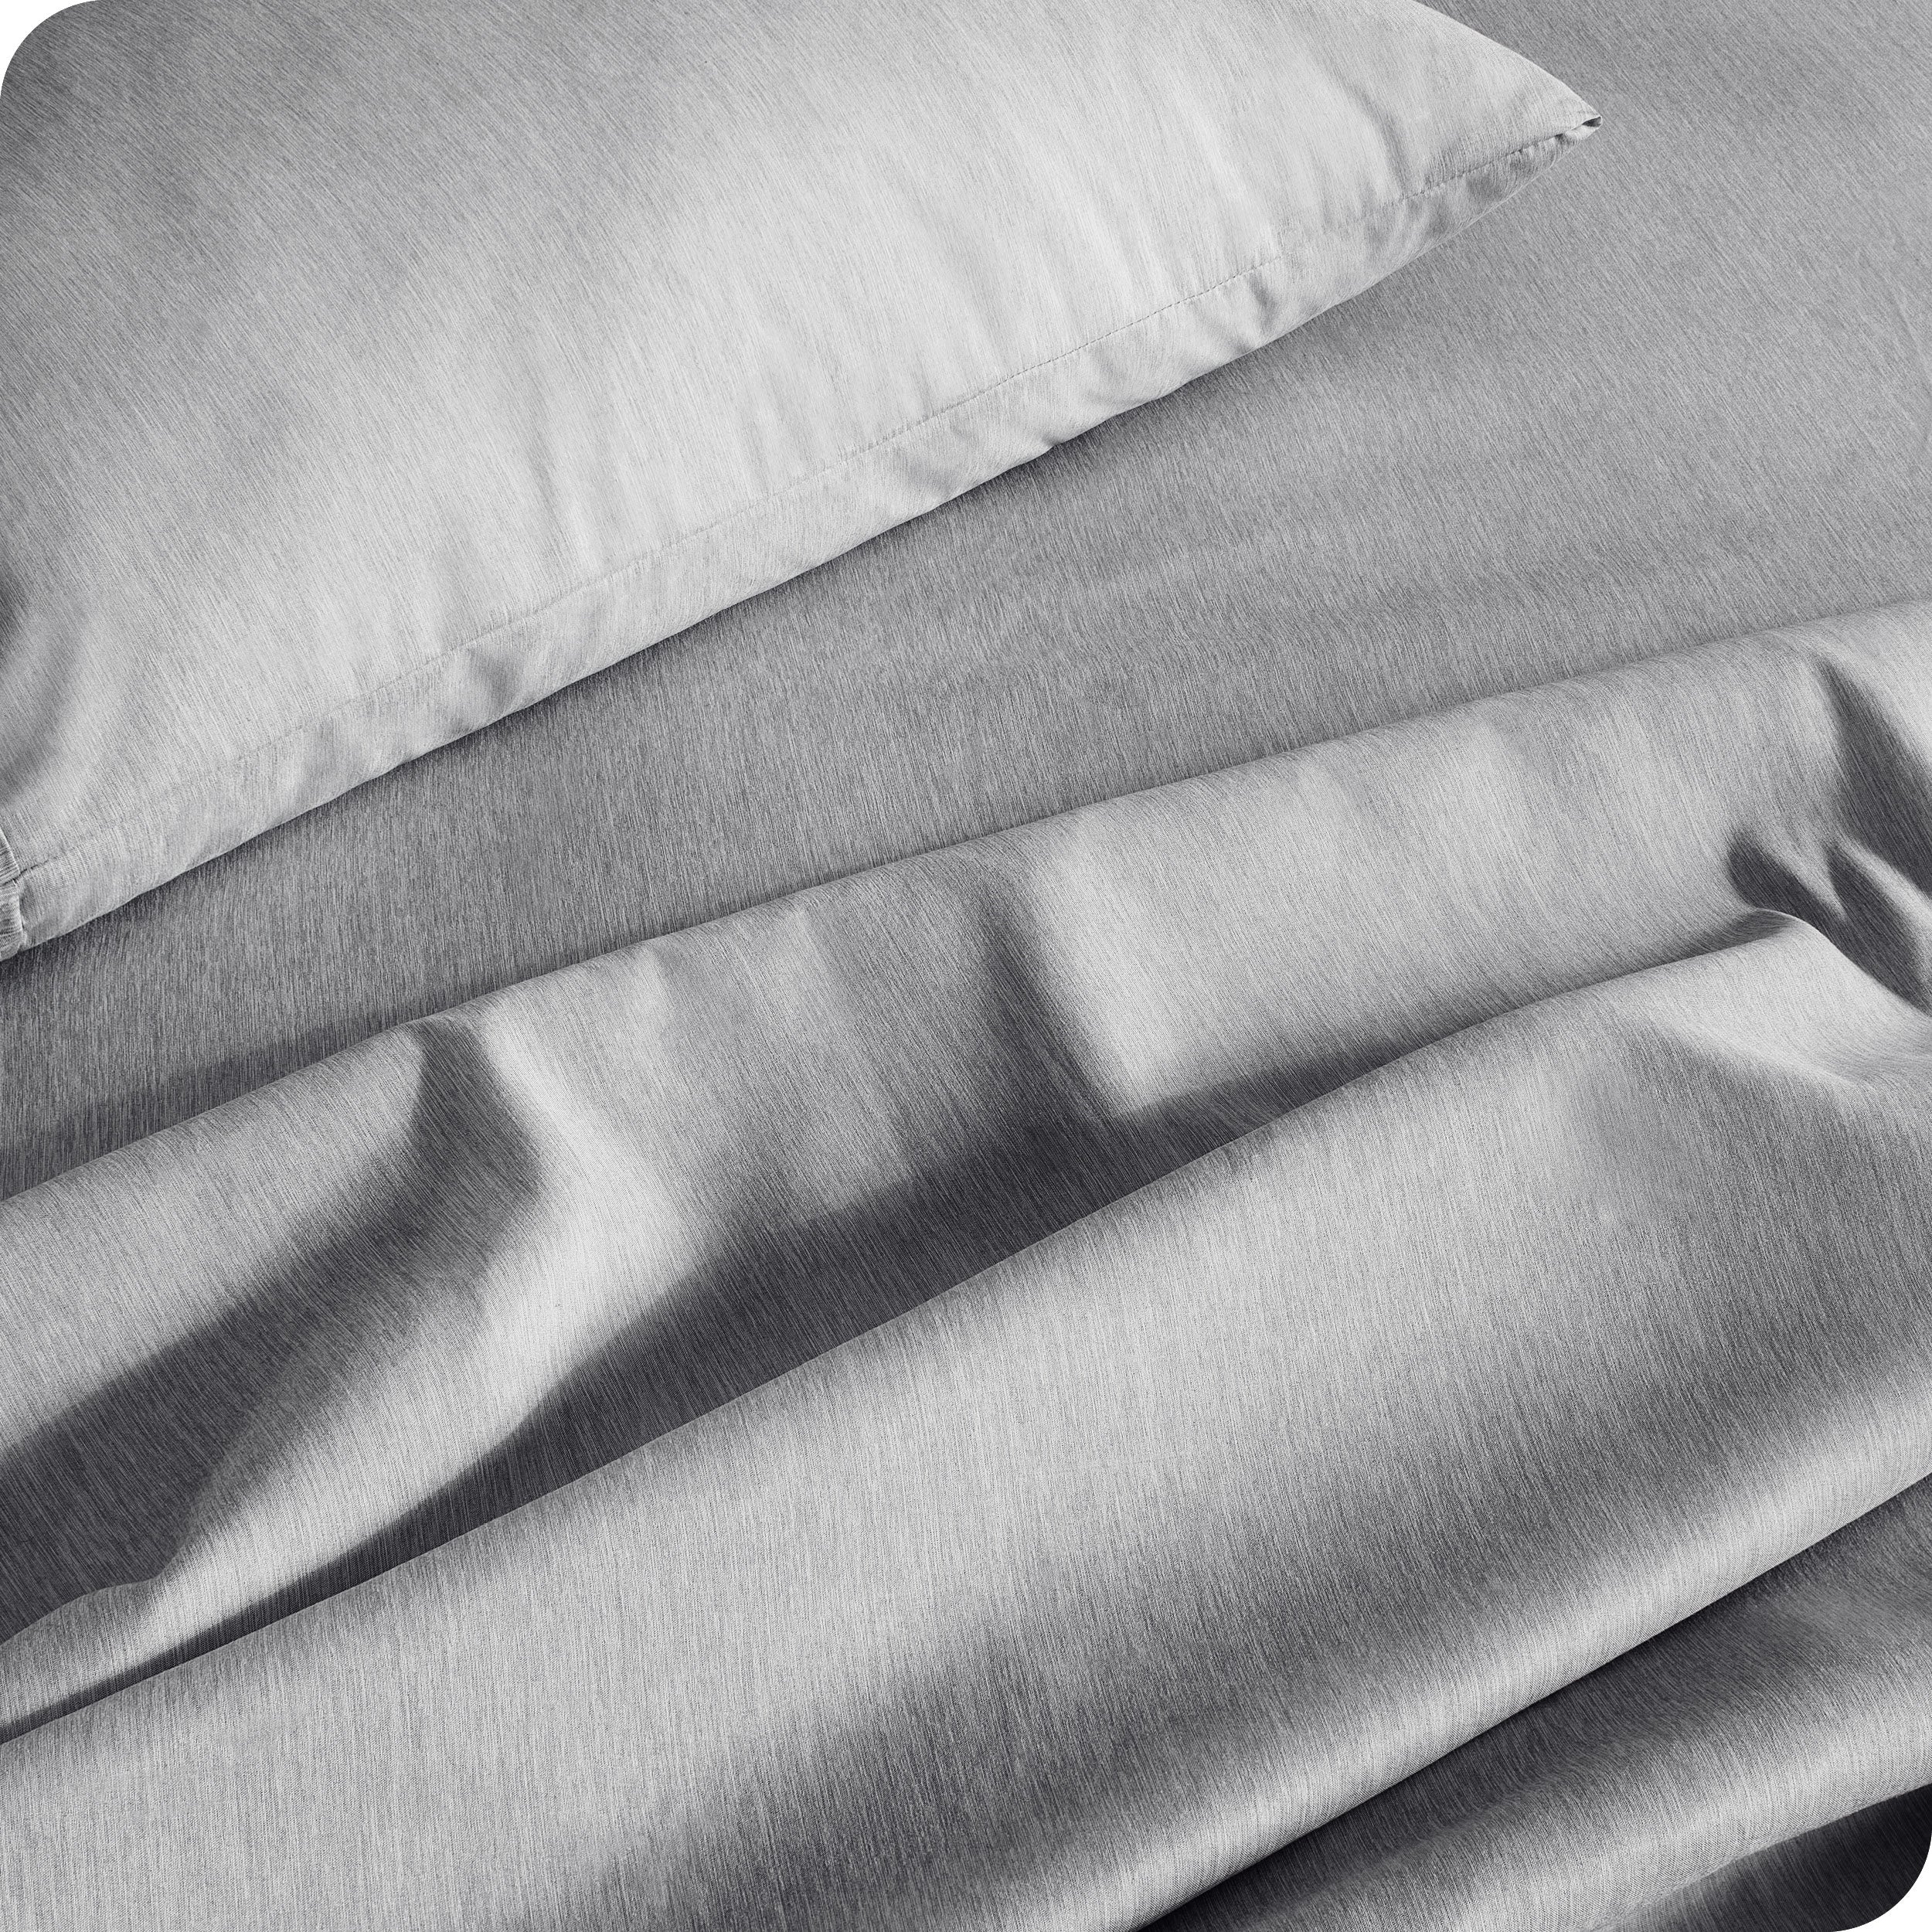 Close up of sheets and a matching pillowcase